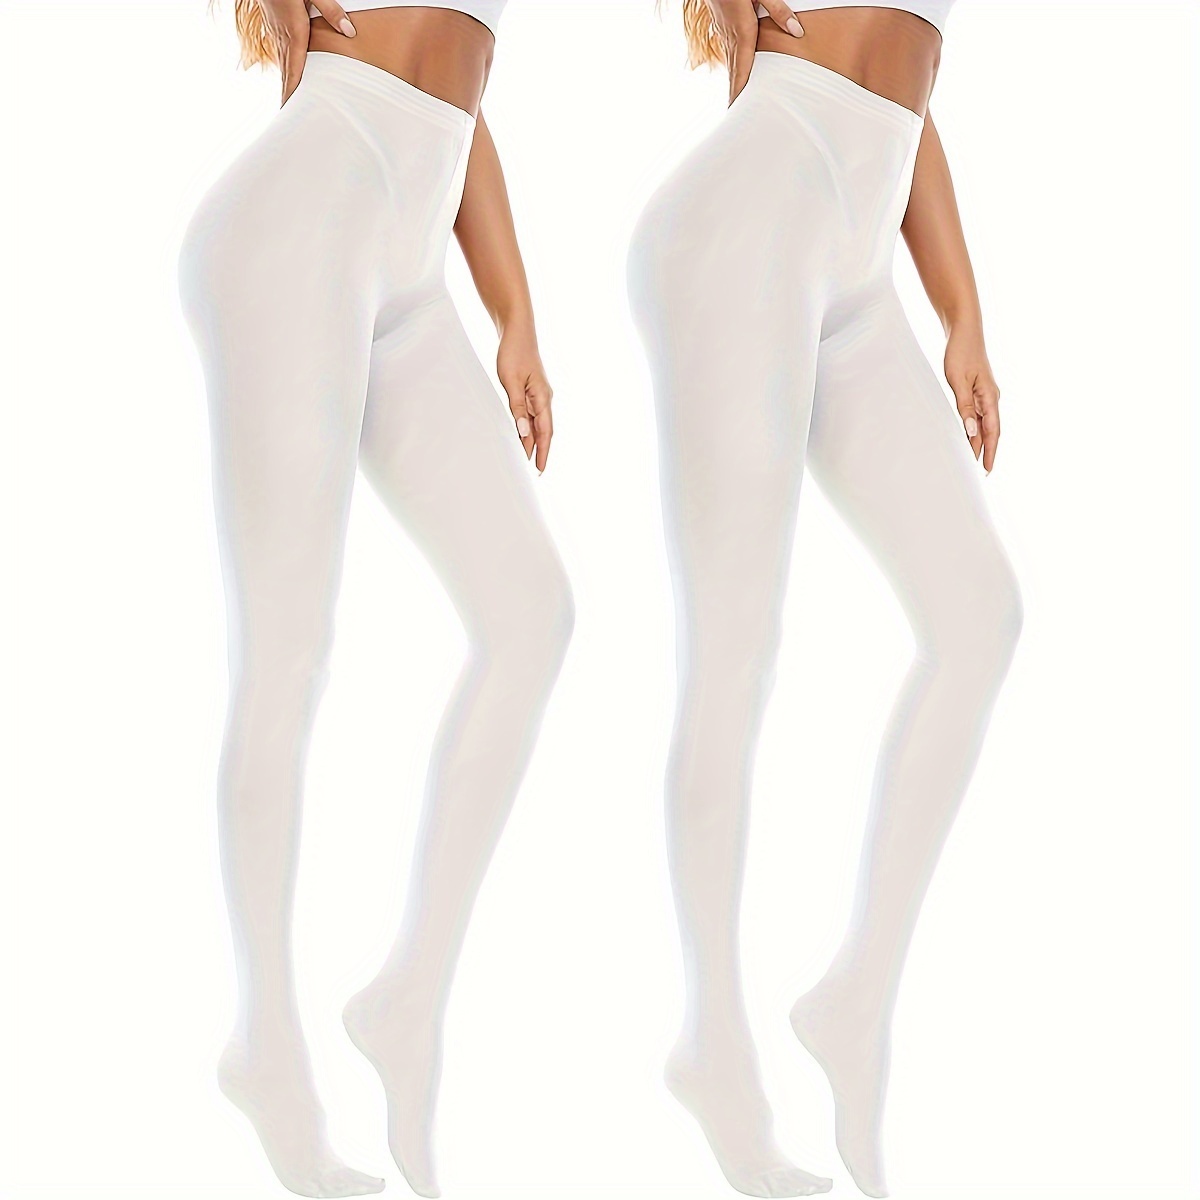 

2 Packs Solid Simple Pantyhose, High Waist Elastic Footed Pantyhose, Women's Stockings & Hosiery